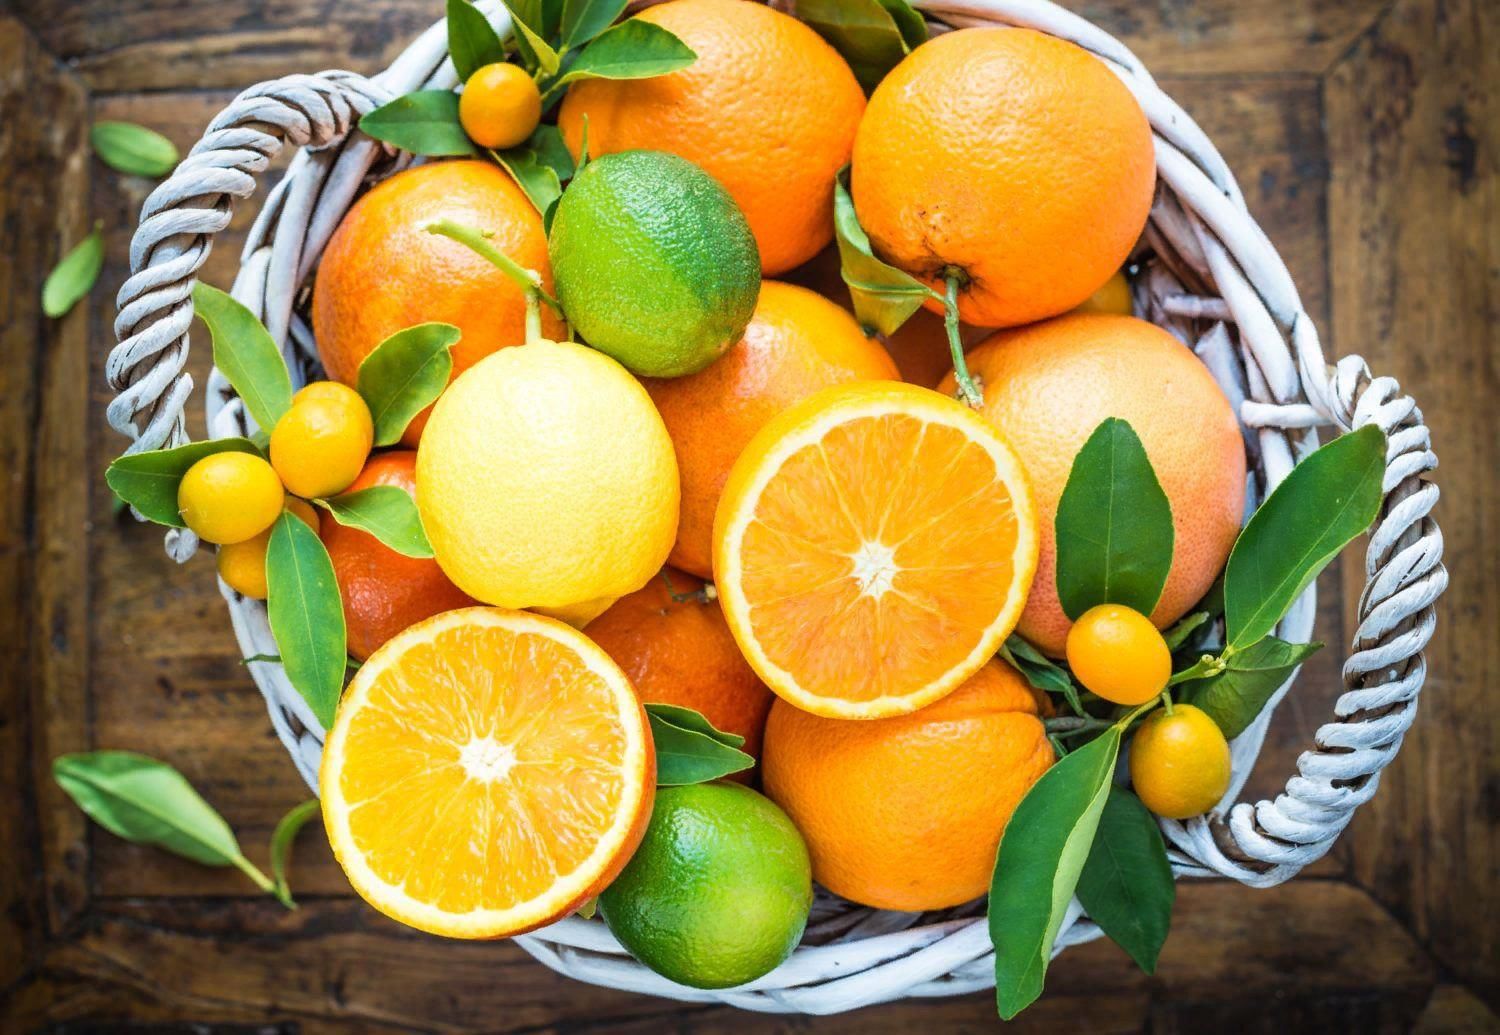 Oranges Provide A Lot Of Vitamin C